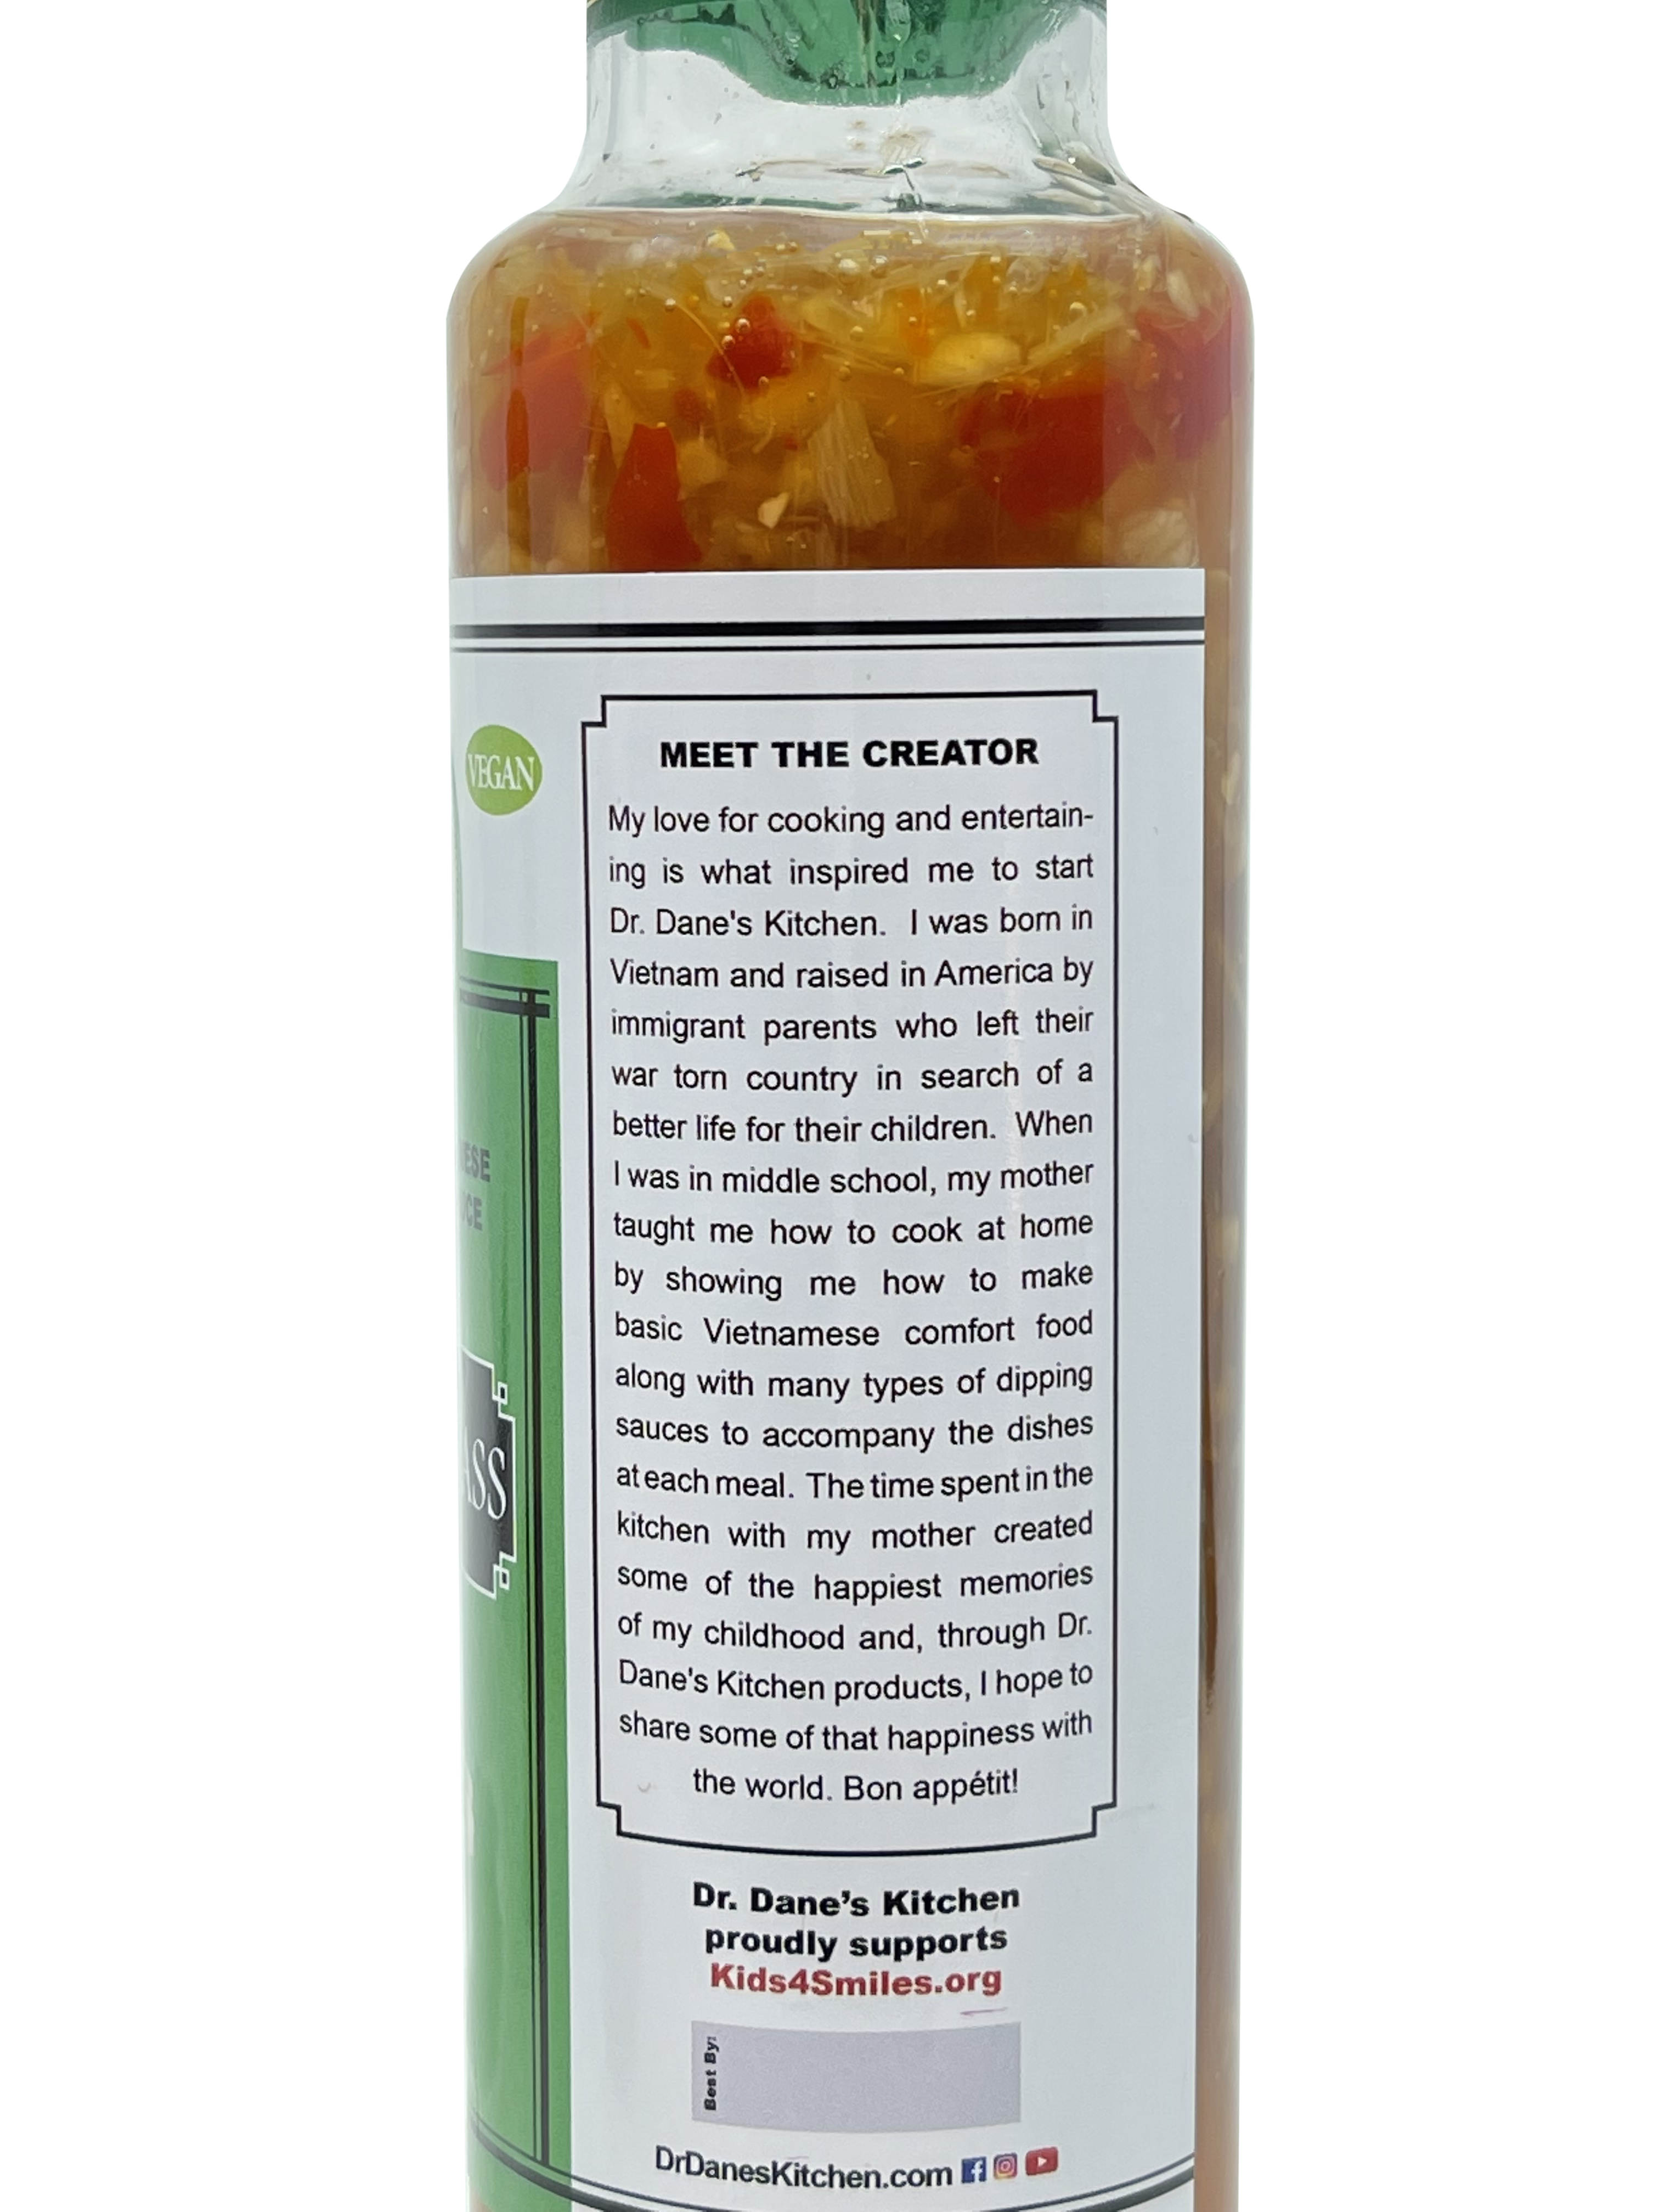 Vegan Lemongrass Authentic Vietnamese Dipping Sauce (Nuoc Cham Chay)